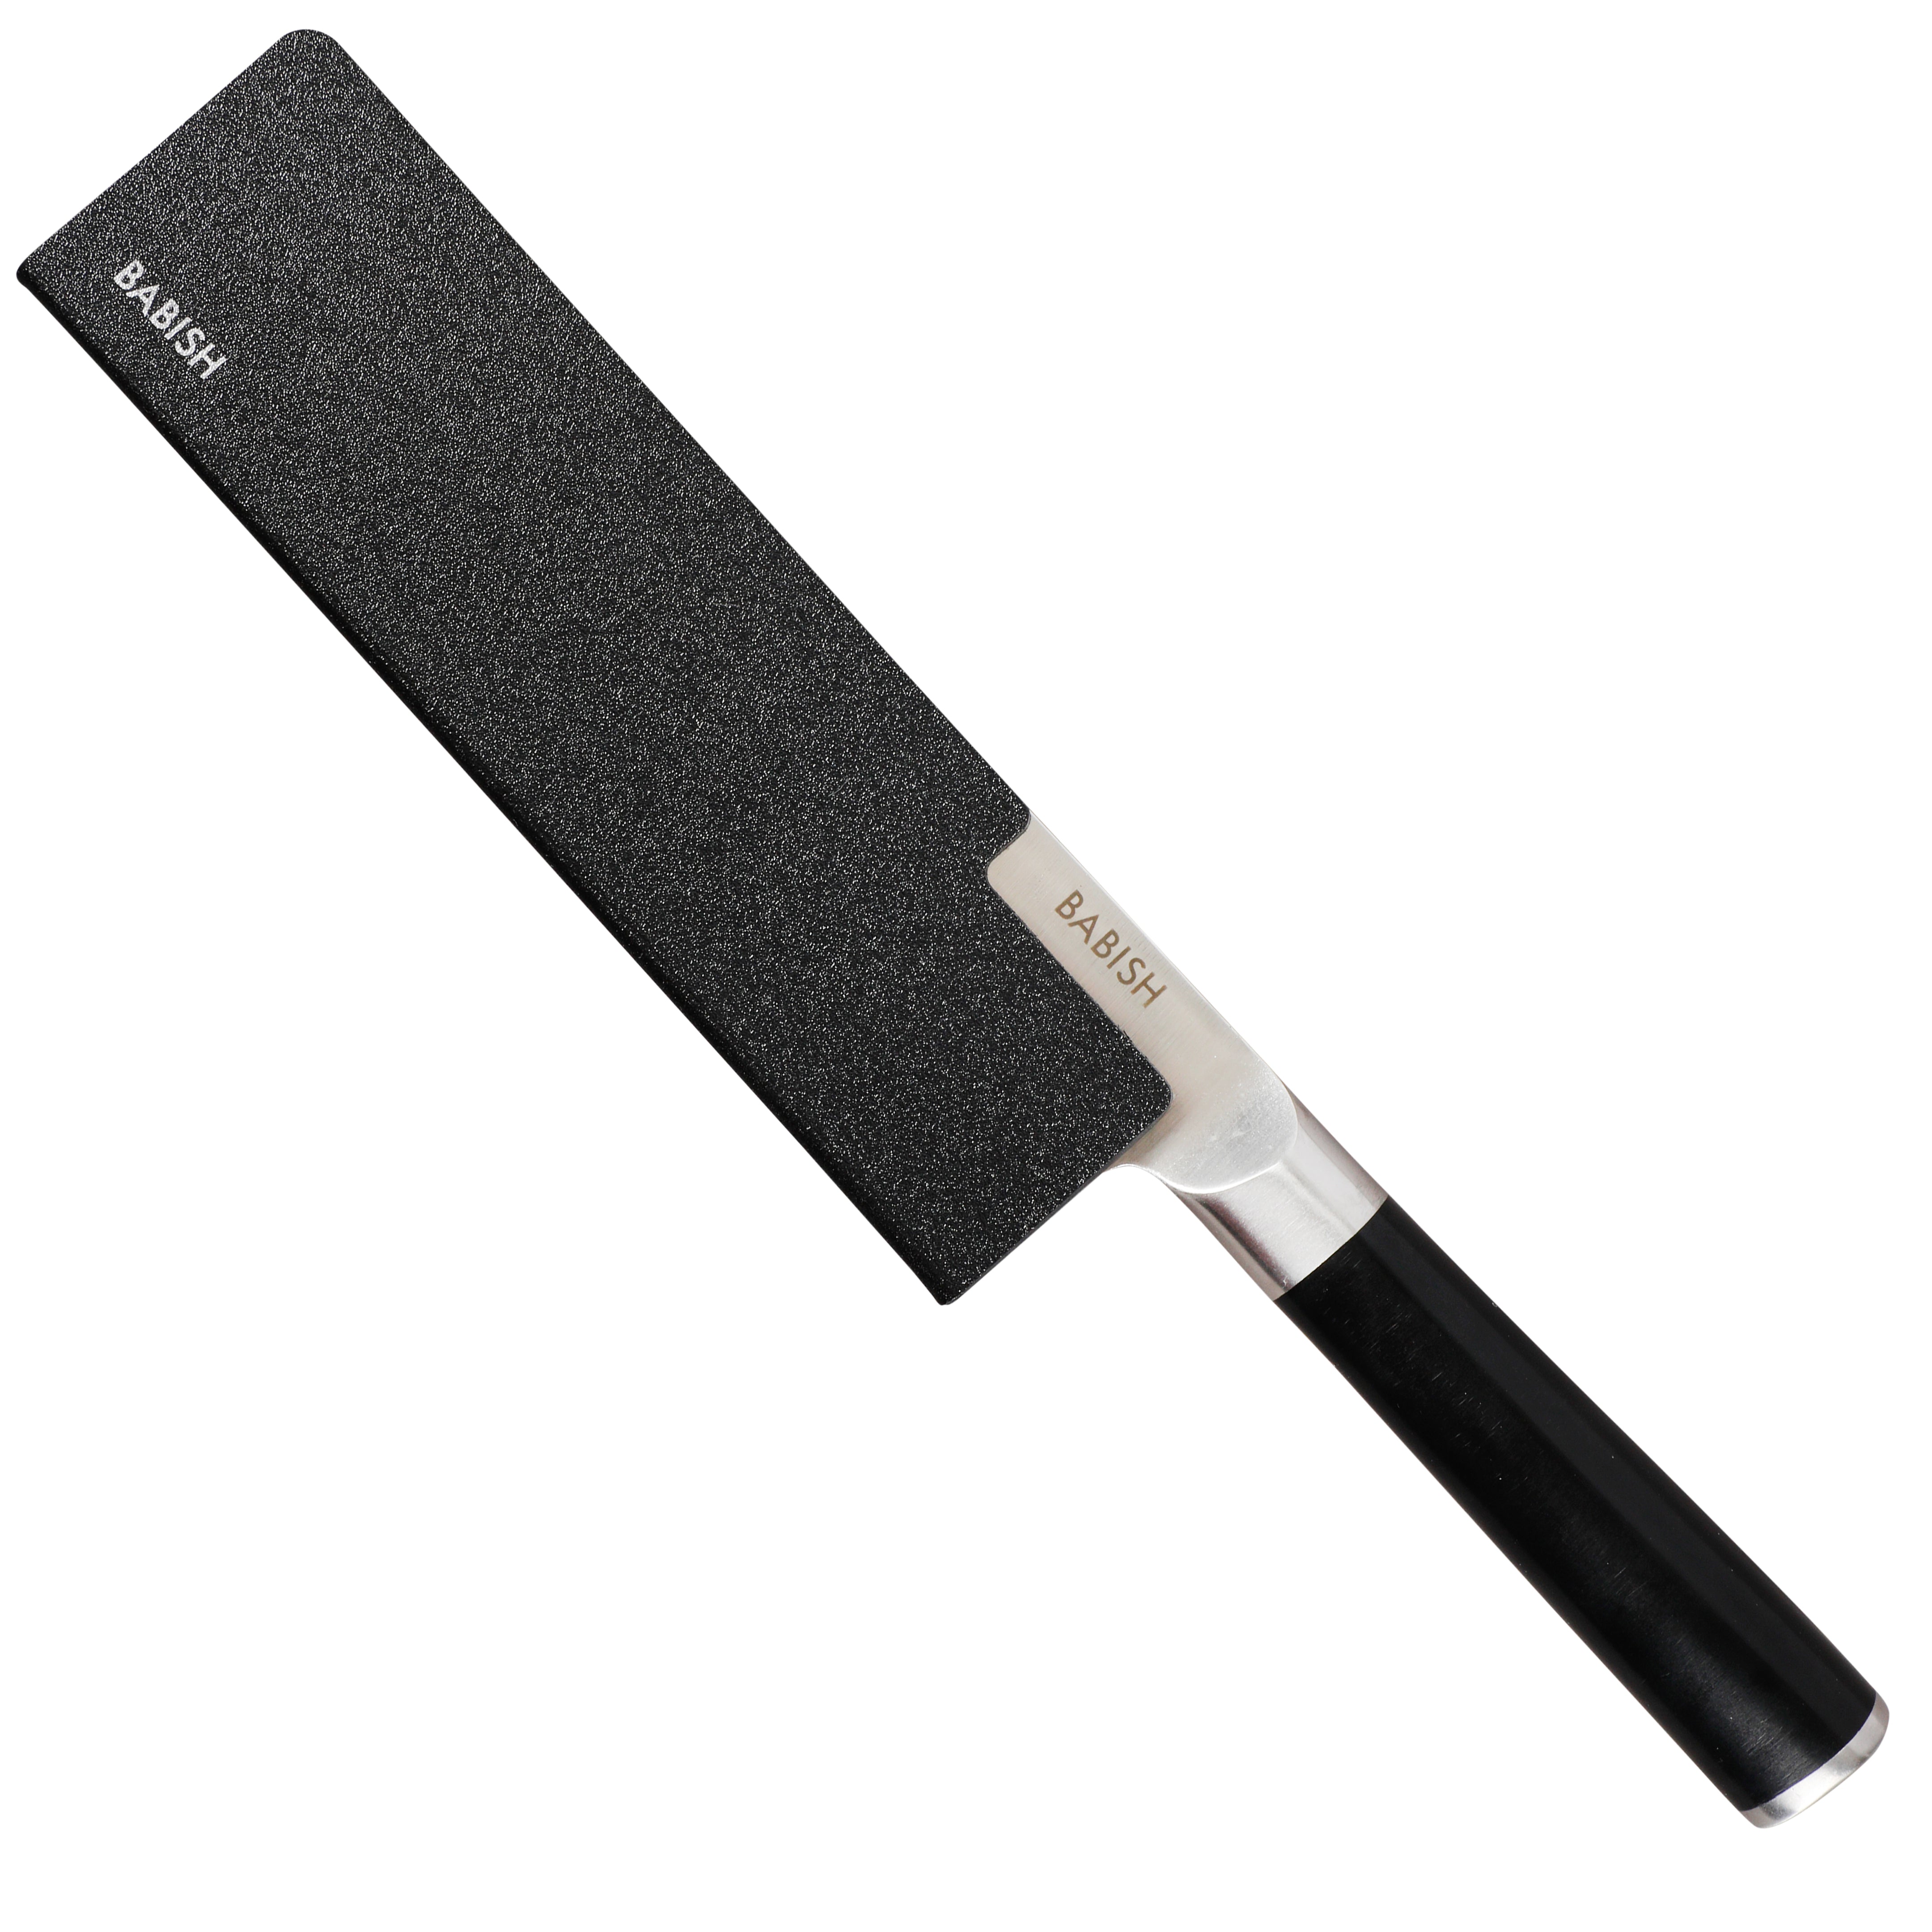 Babish High-Carbon 1.4116 German Steel Cutlery, 7.5 Belgium